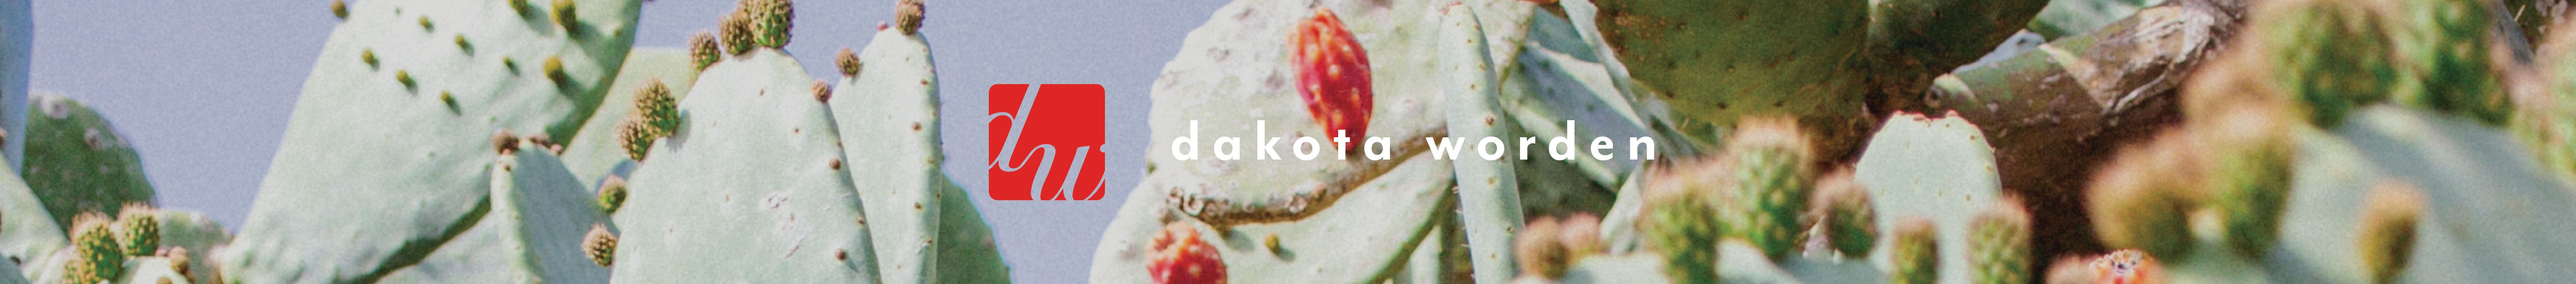 Bannière de profil de Dakota Worden